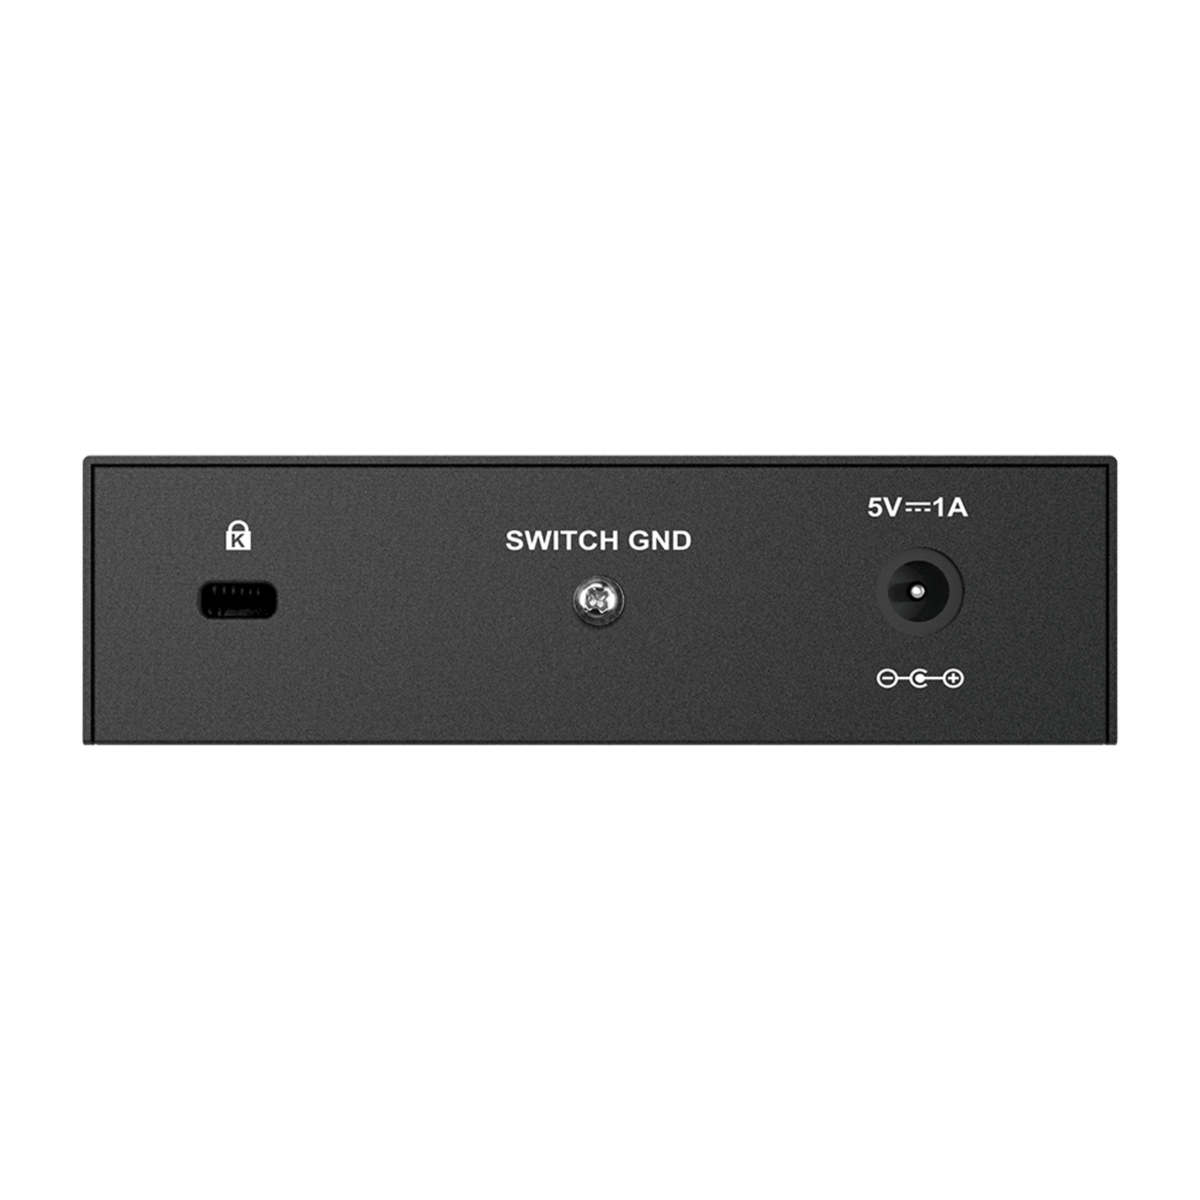 D-Link 5-Port Unmanaged Gigabit Metal Desktop Switch, Black, DGS-105